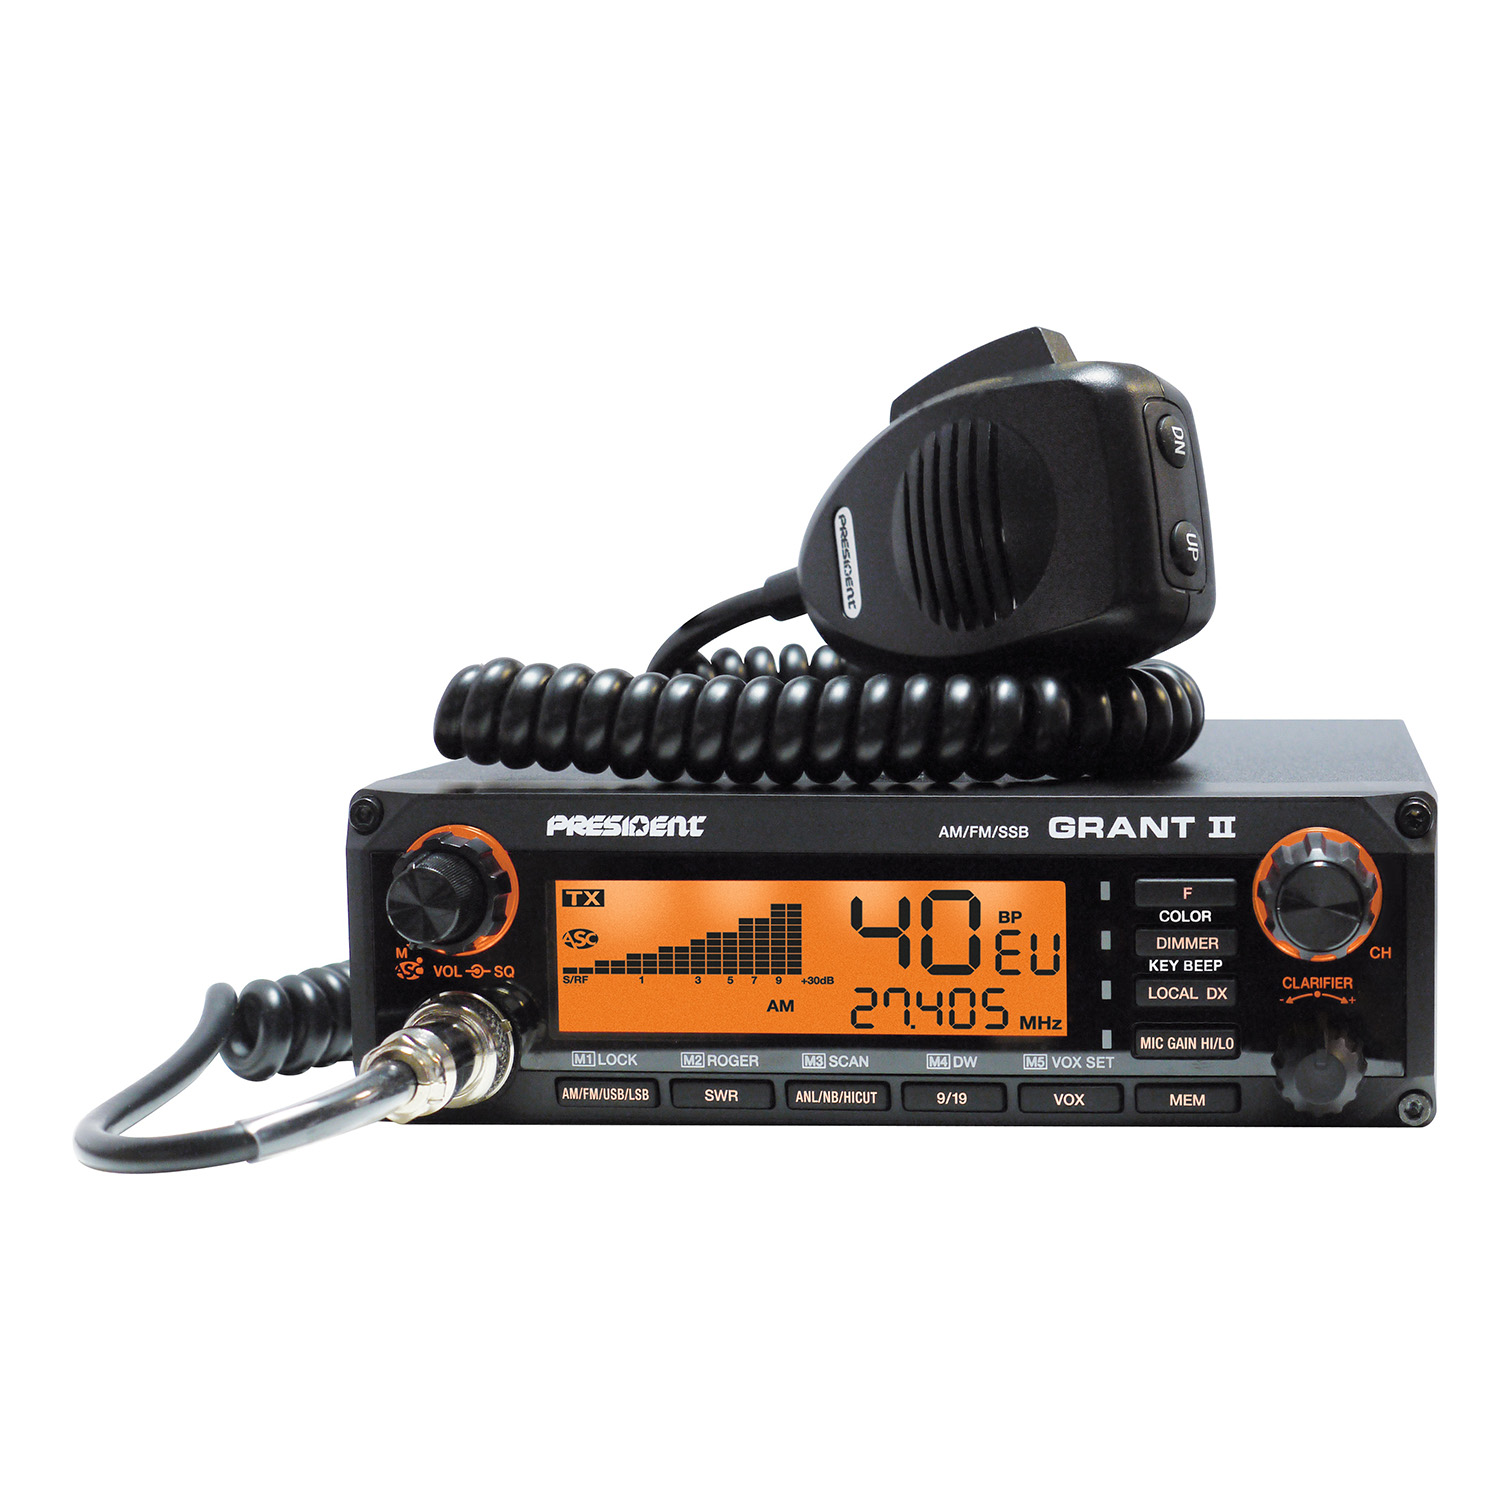 Statie radio CB President Grant II ASC, AM/FM/SSB cu squelch automat cod TXMU510